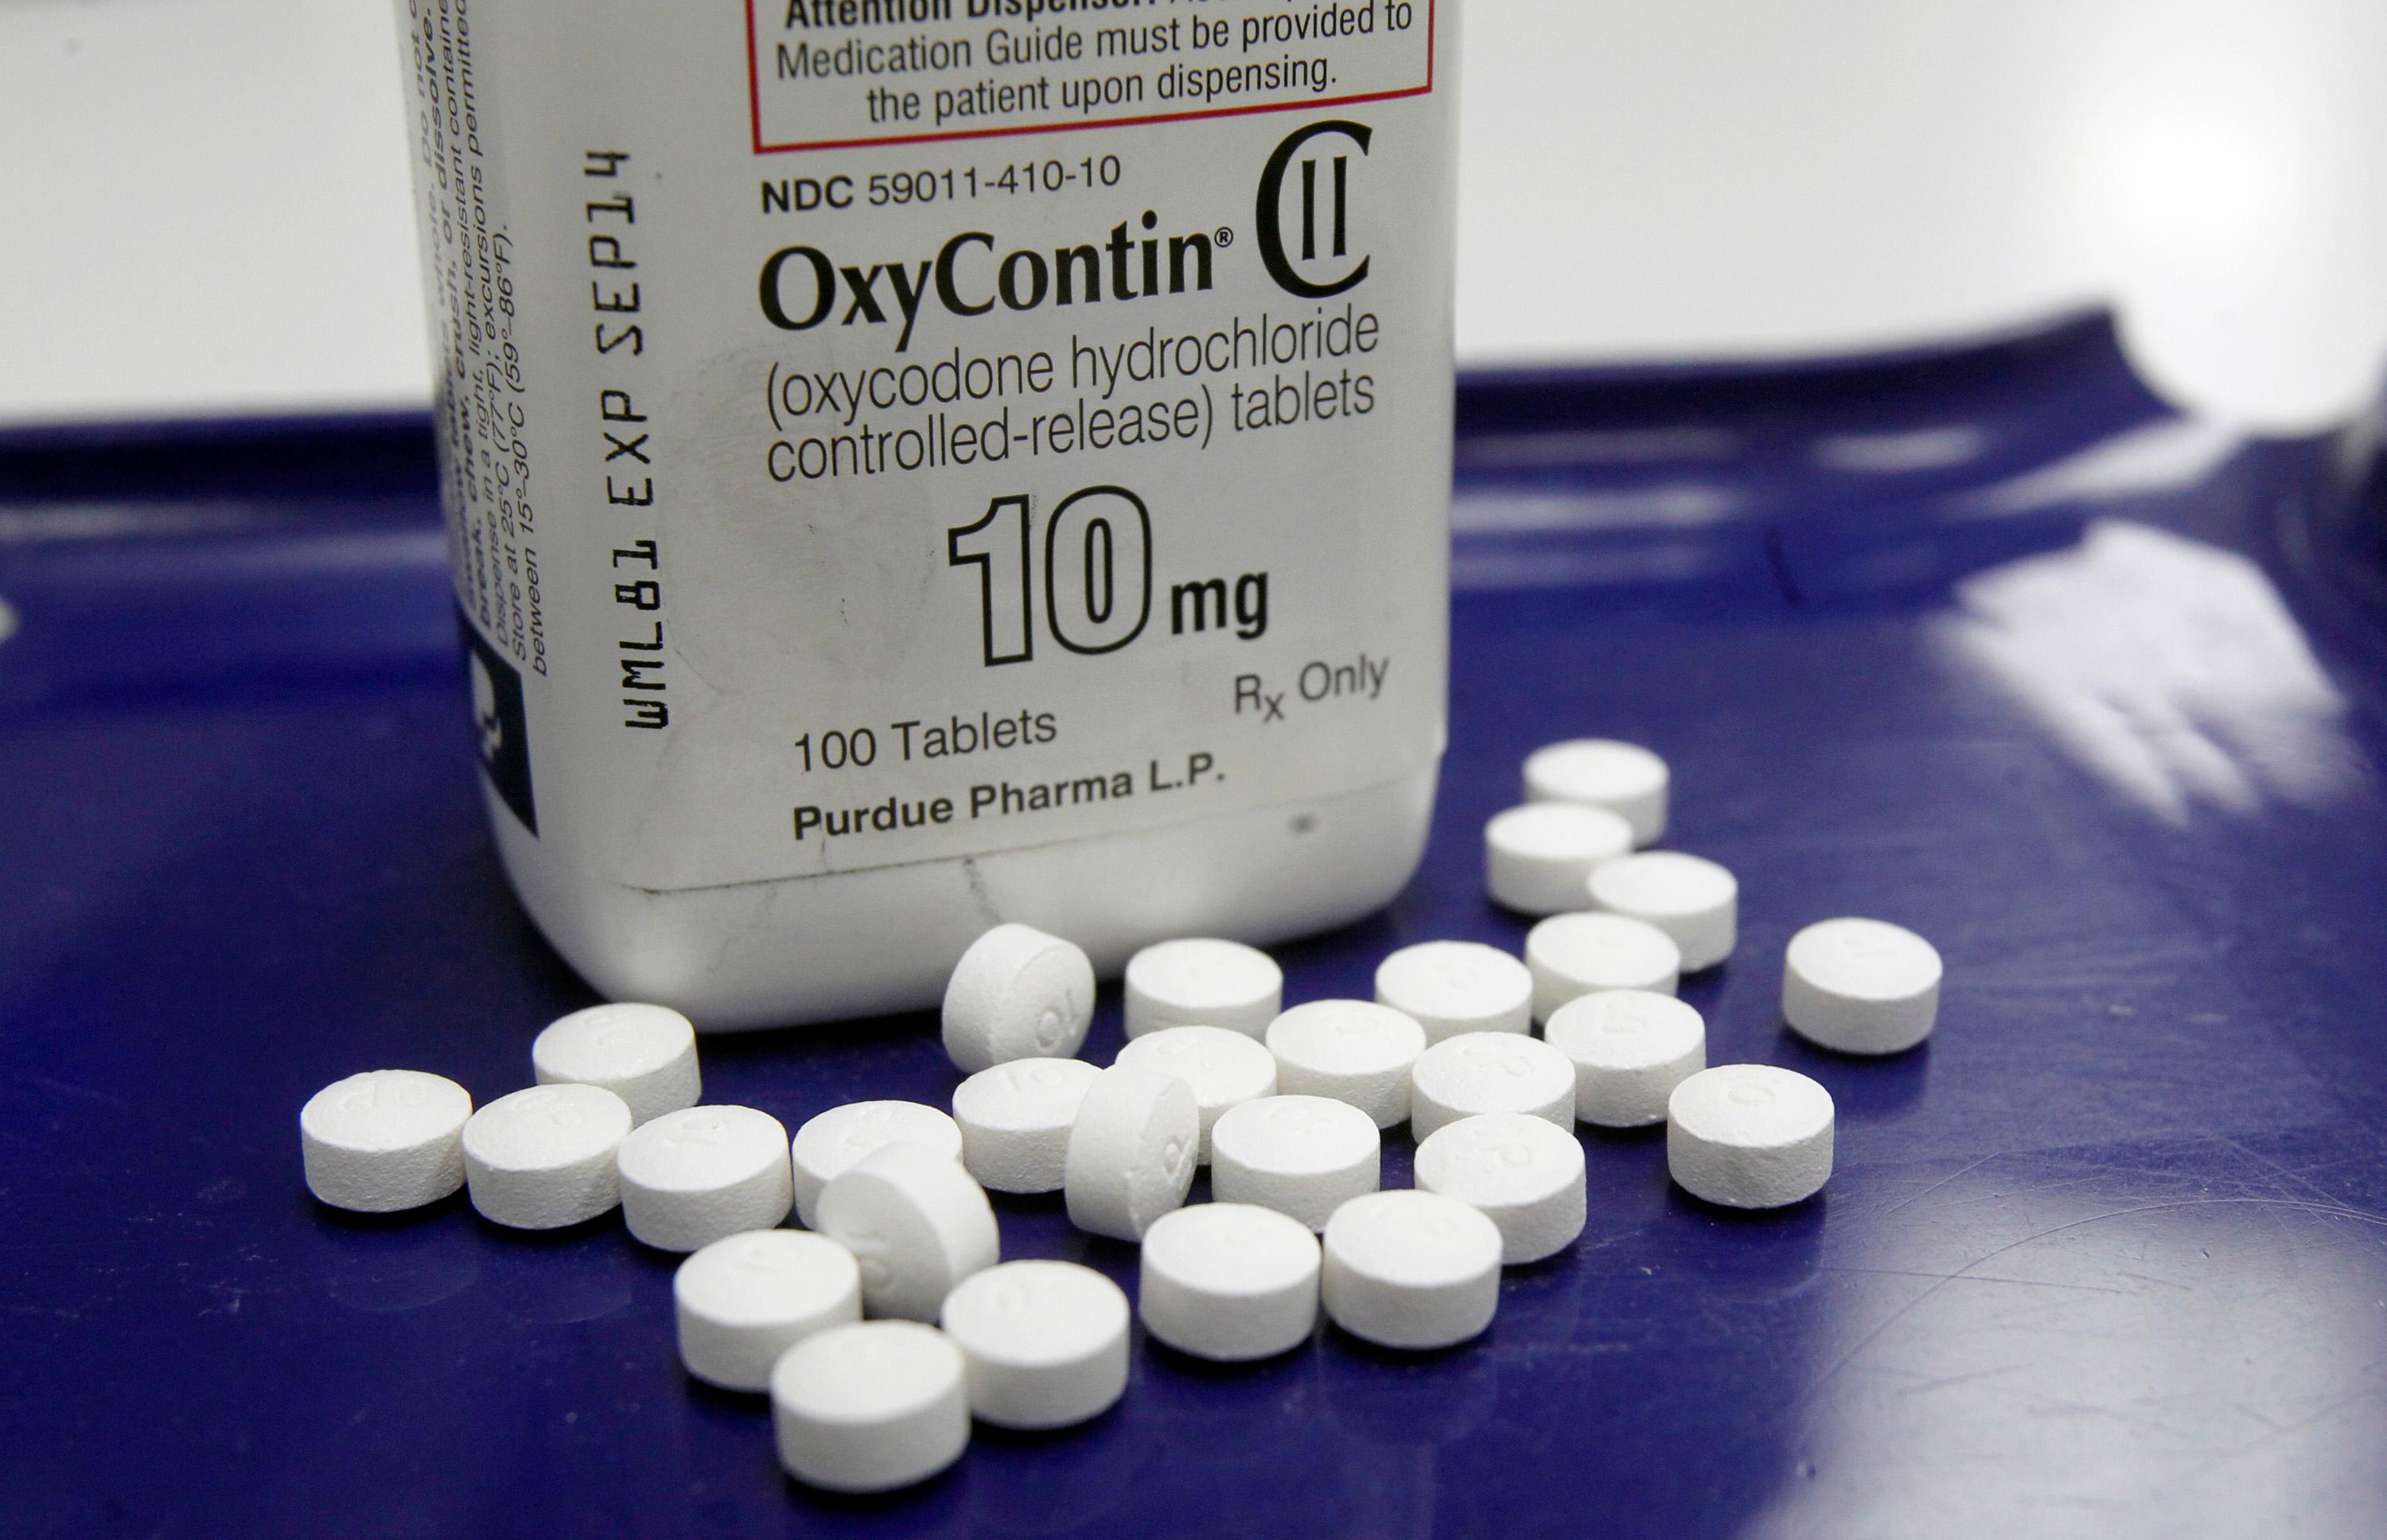 Photo: OxyContin pill bottle